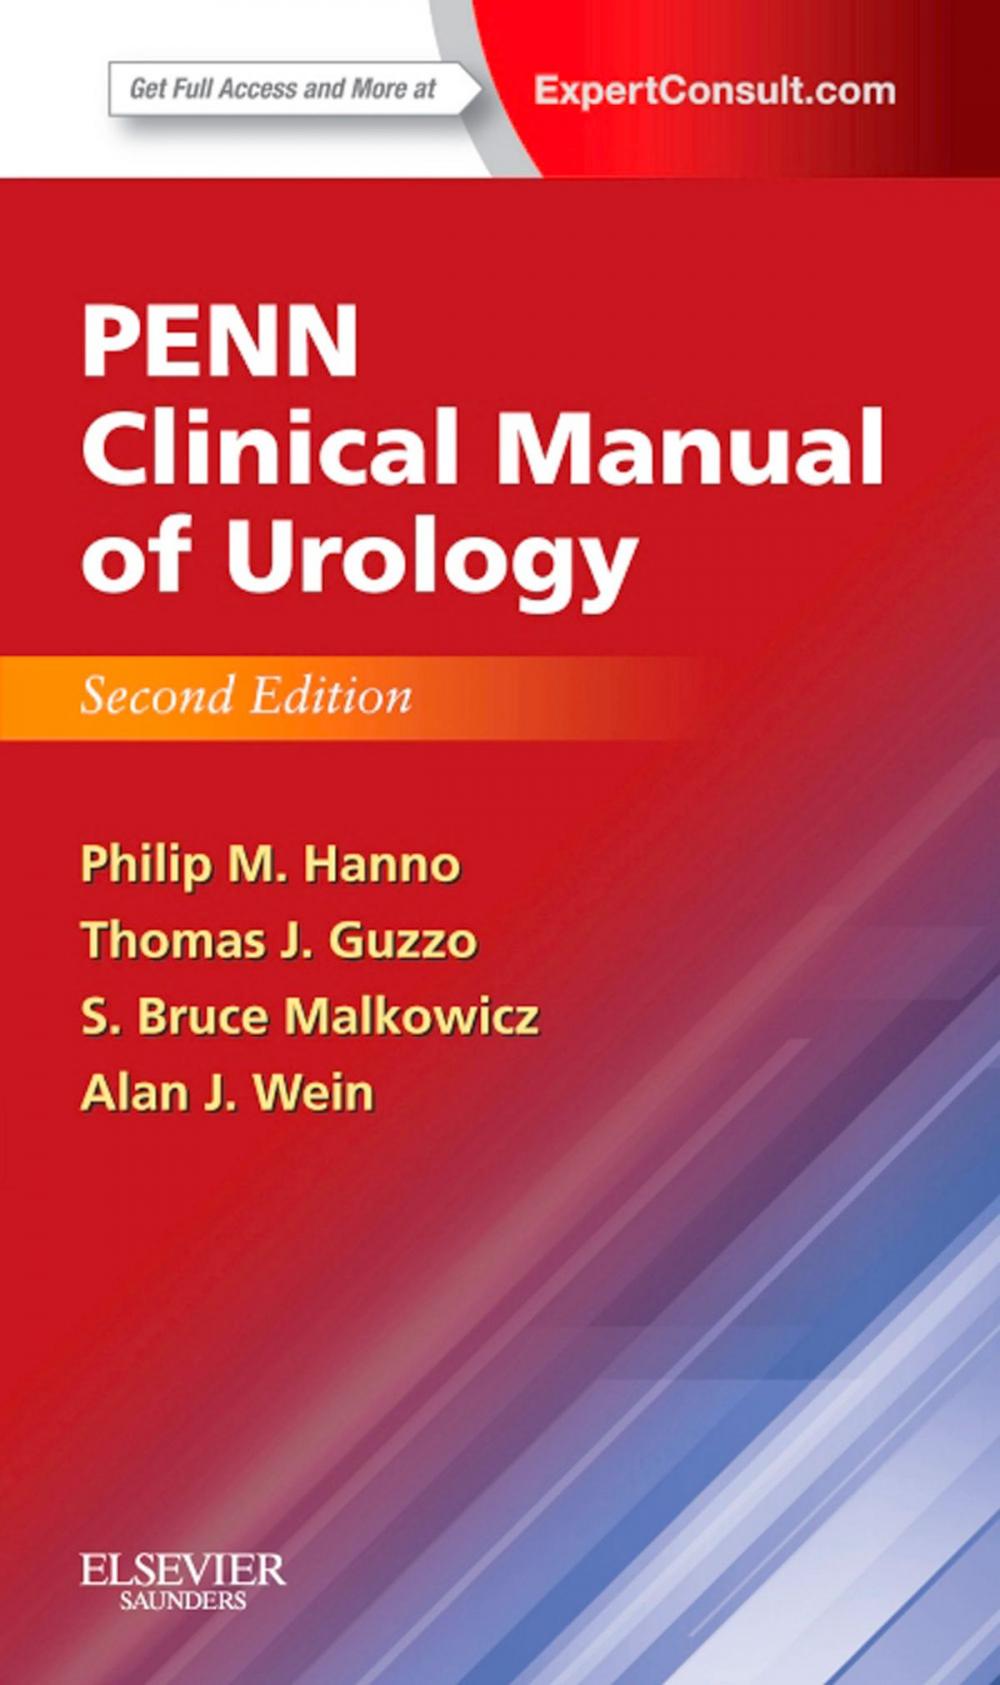 Big bigCover of Penn Clinical Manual of Urology E-Book